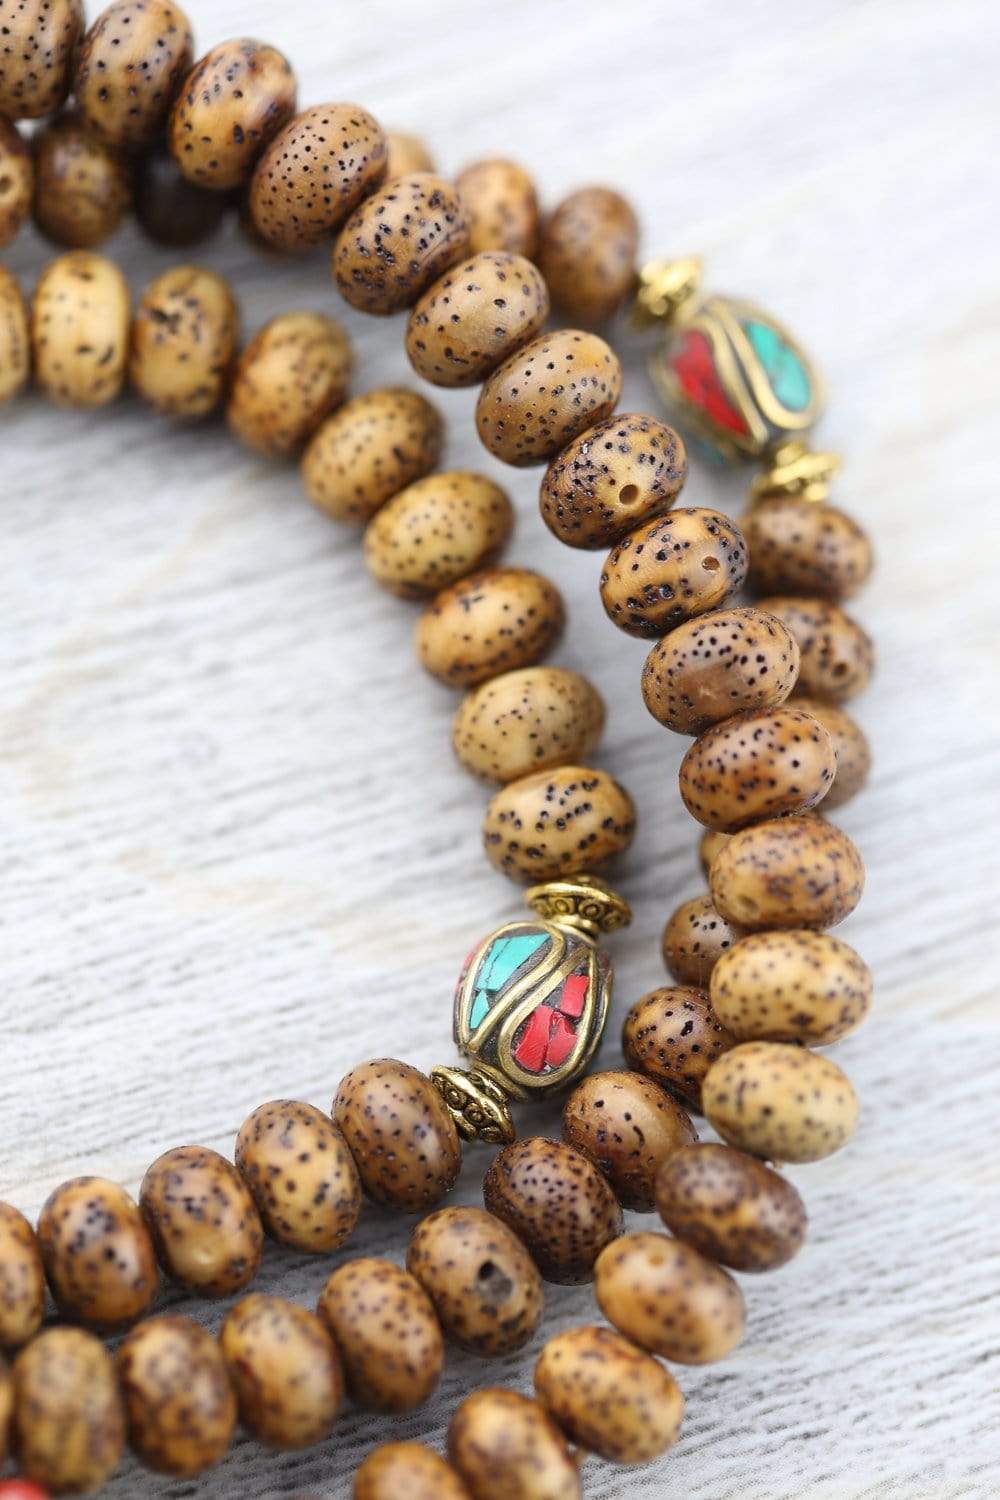 Bodhi Beads Natural AAA, Lotus Seed Beads